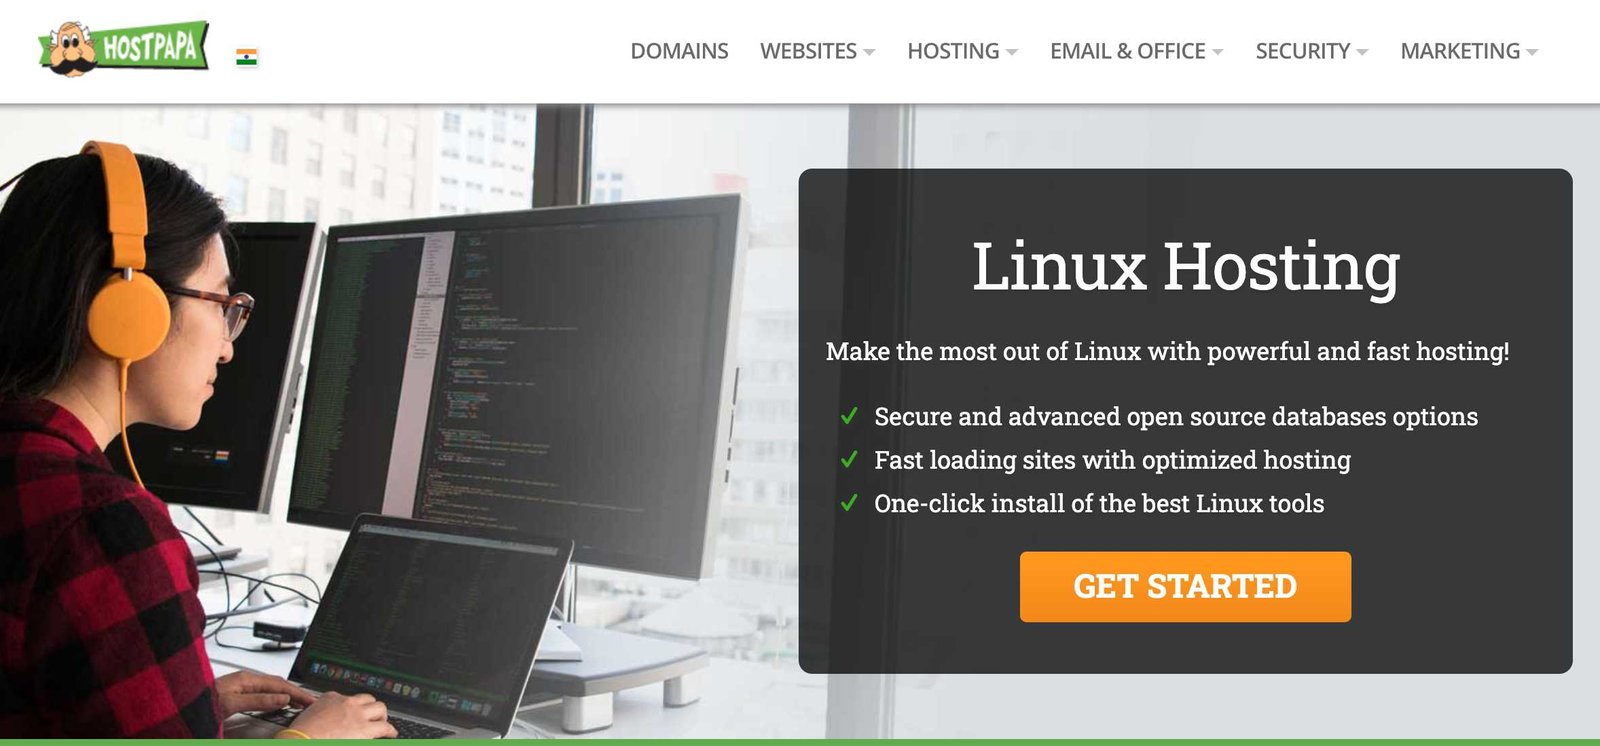 hostpapa linux hosting